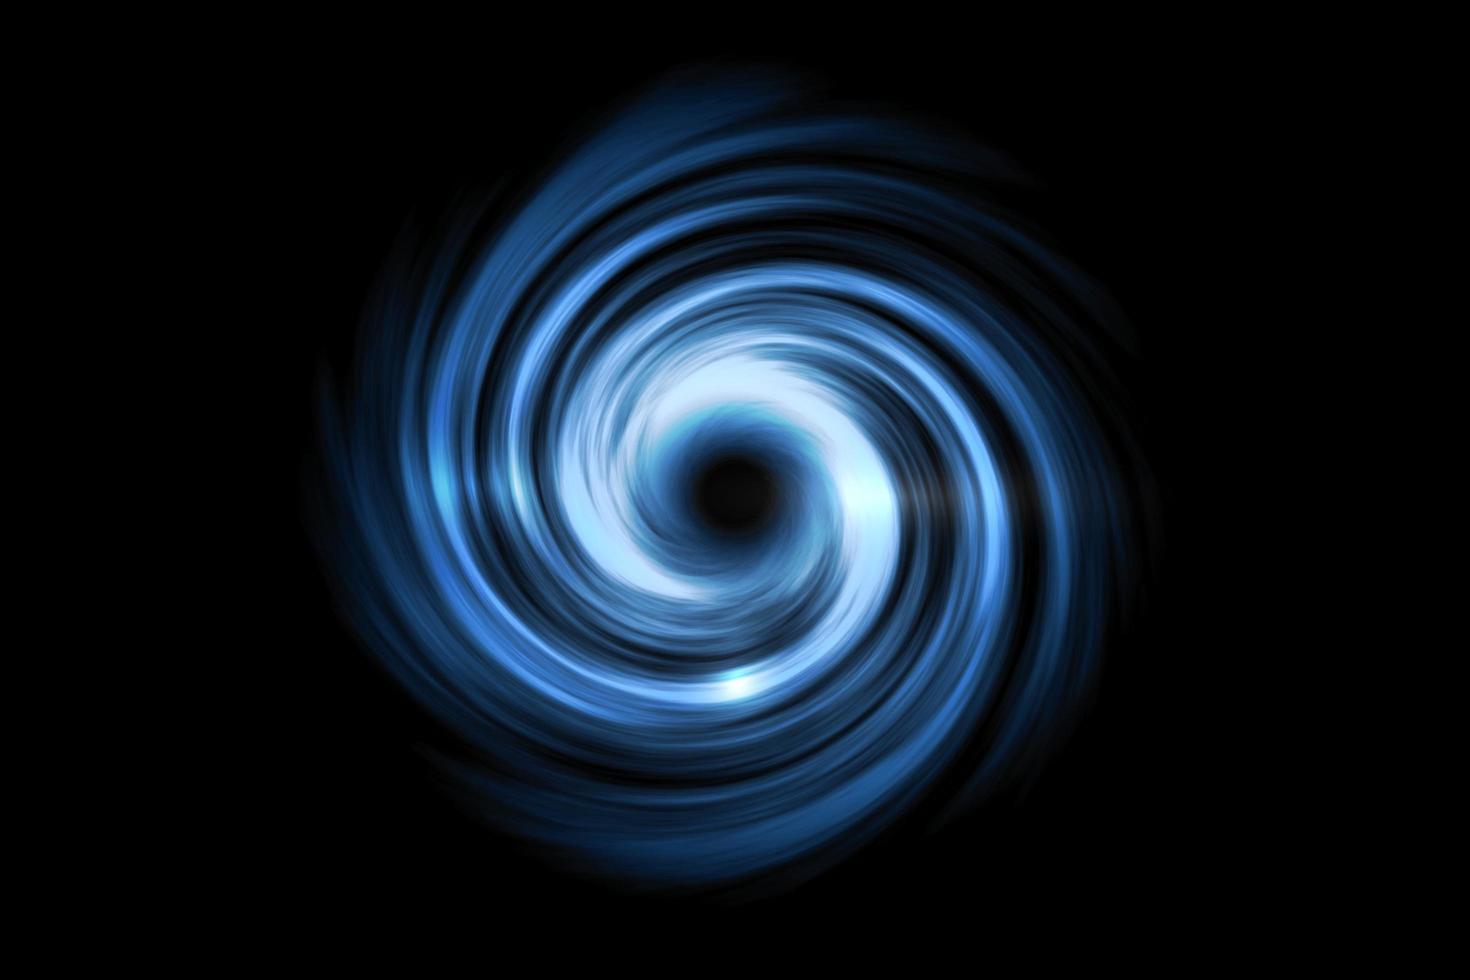 buraco negro abstrato com túnel espiral azul claro sobre fundo preto foto